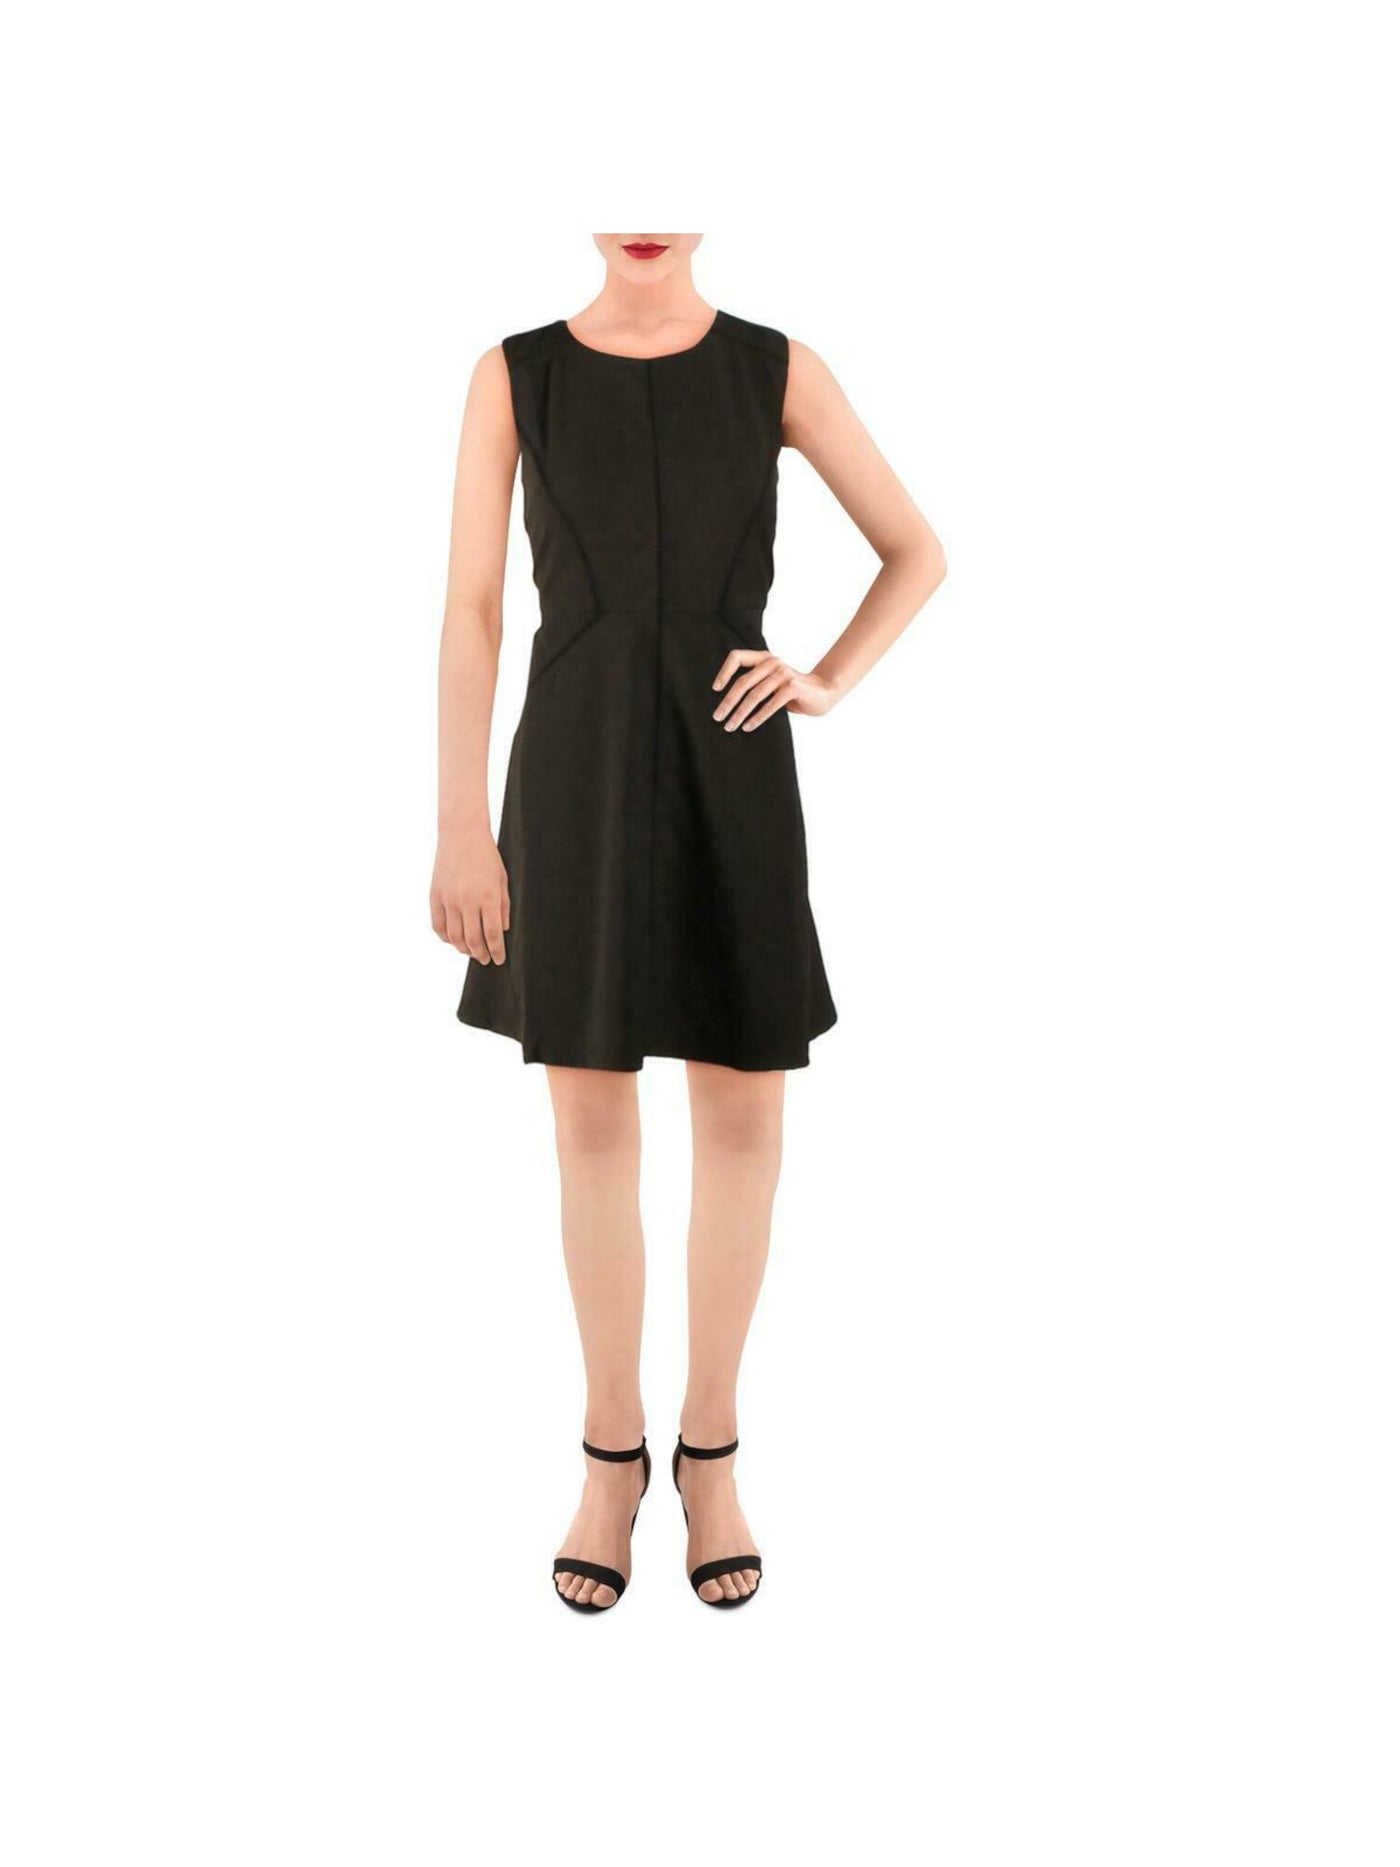 PATRIZIA LUCA Womens Black Sleeveless Above The Knee Fit + Flare Dress Size: S